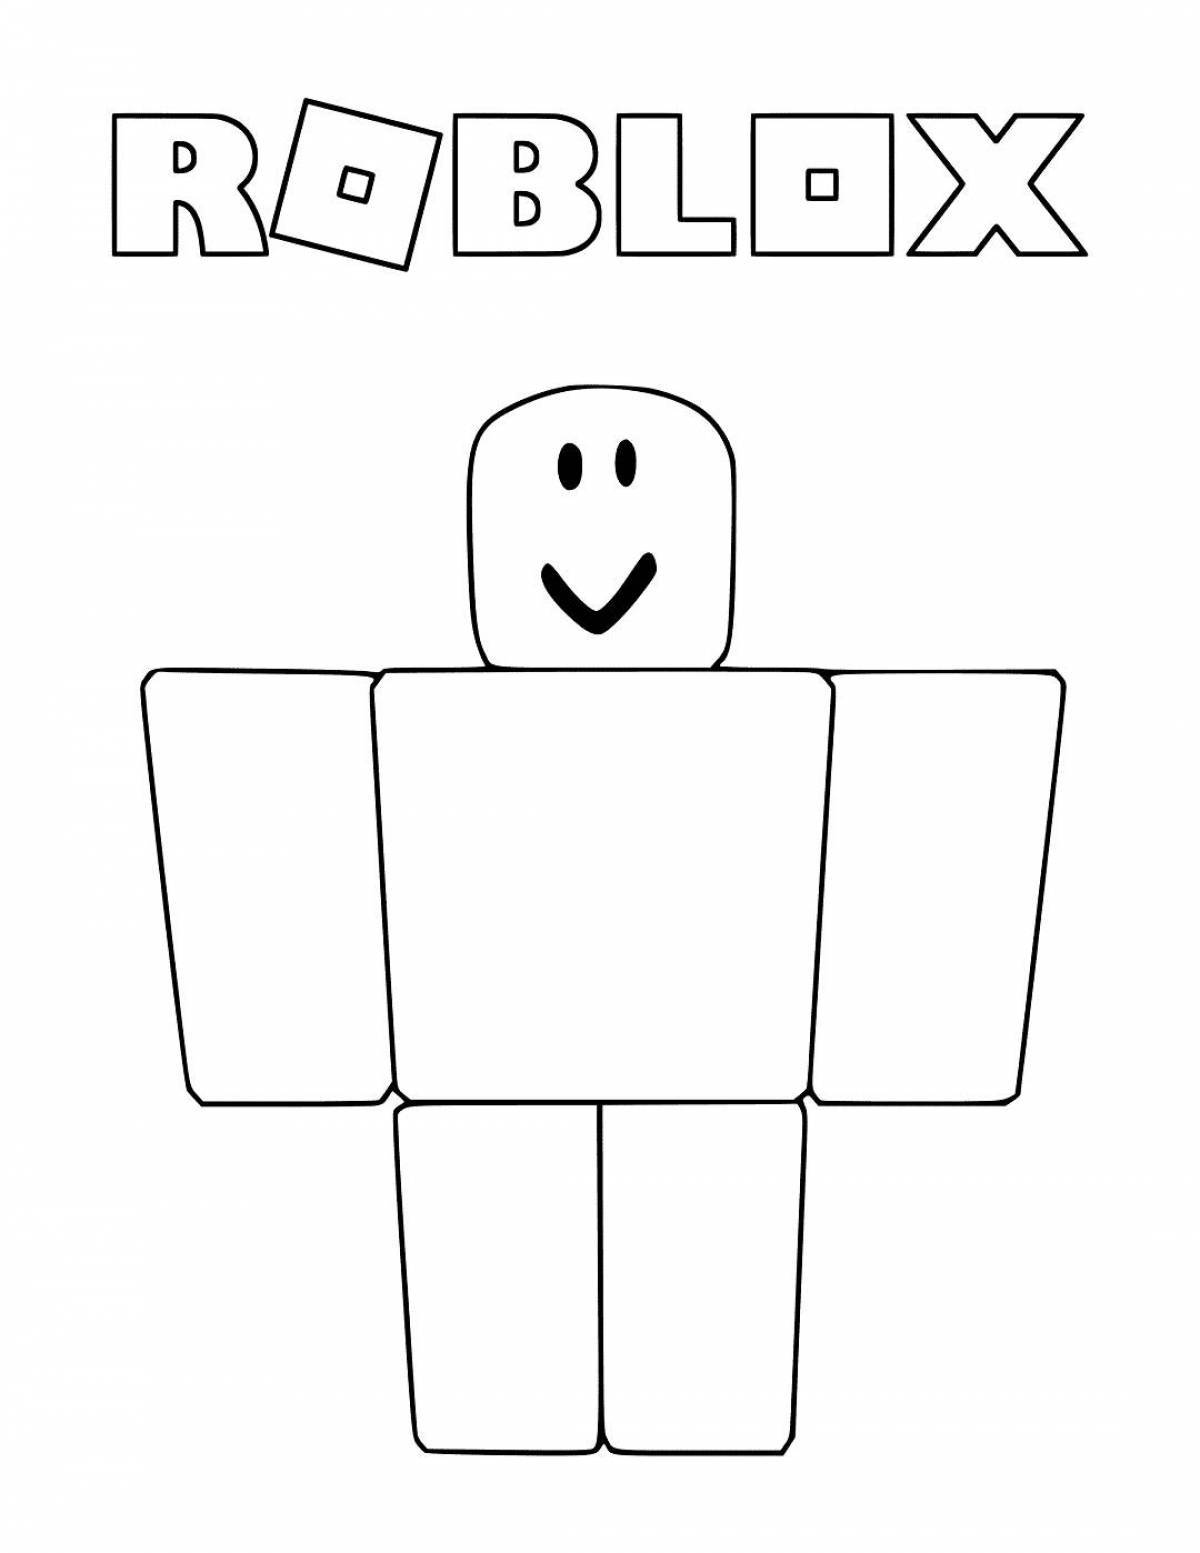 Roblox dors bright coloring page